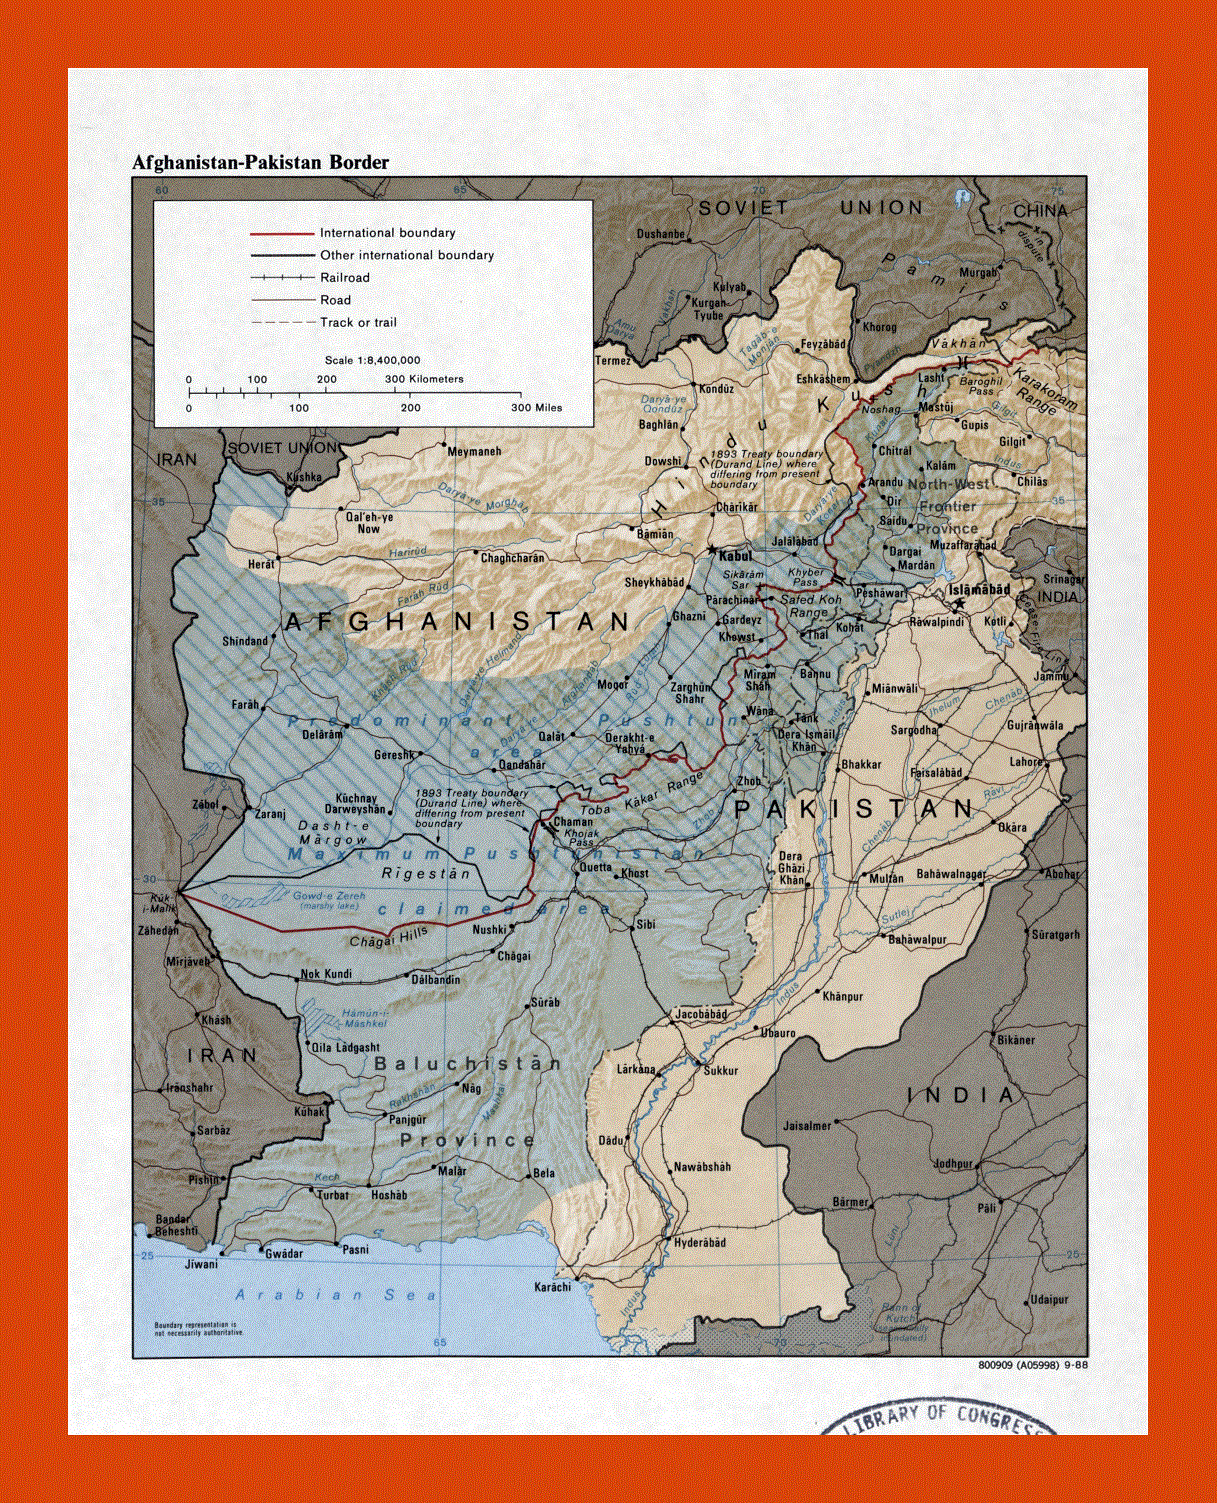 Map of Afghanistan-Pakistan border - 1988